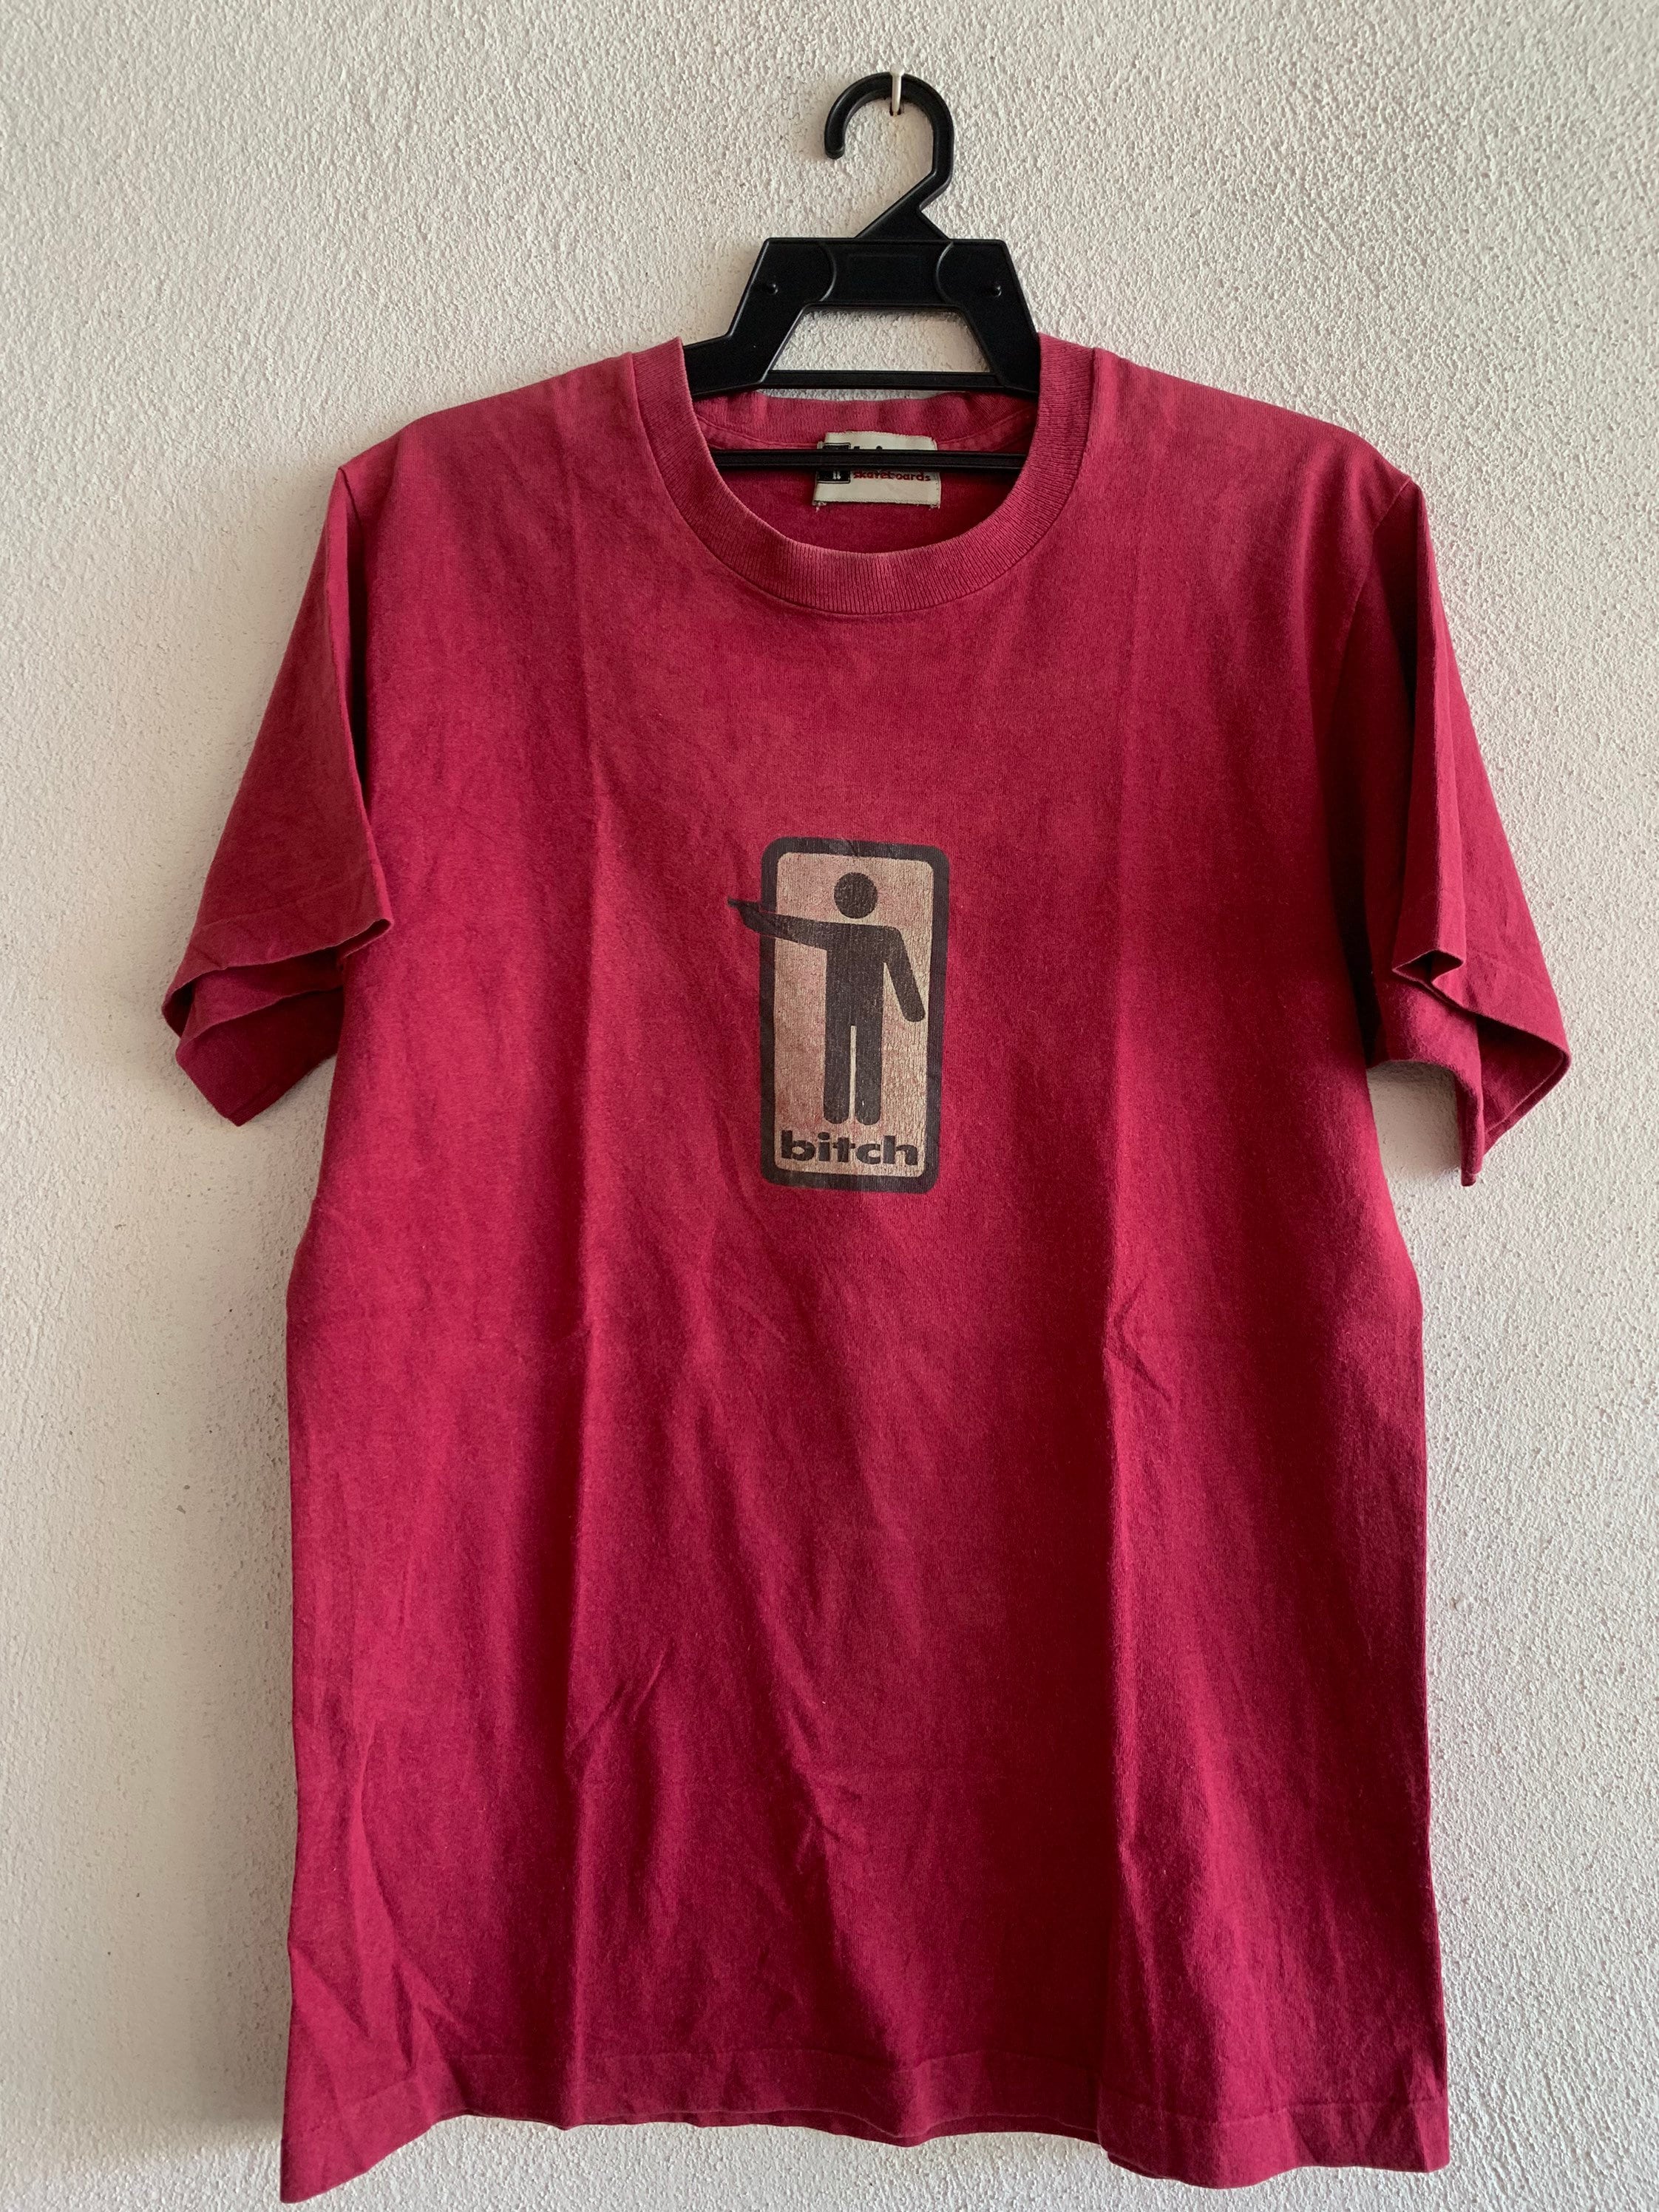 Vintage 90's Bitch Skateboard T Shirt / Skate /punk / Powell 